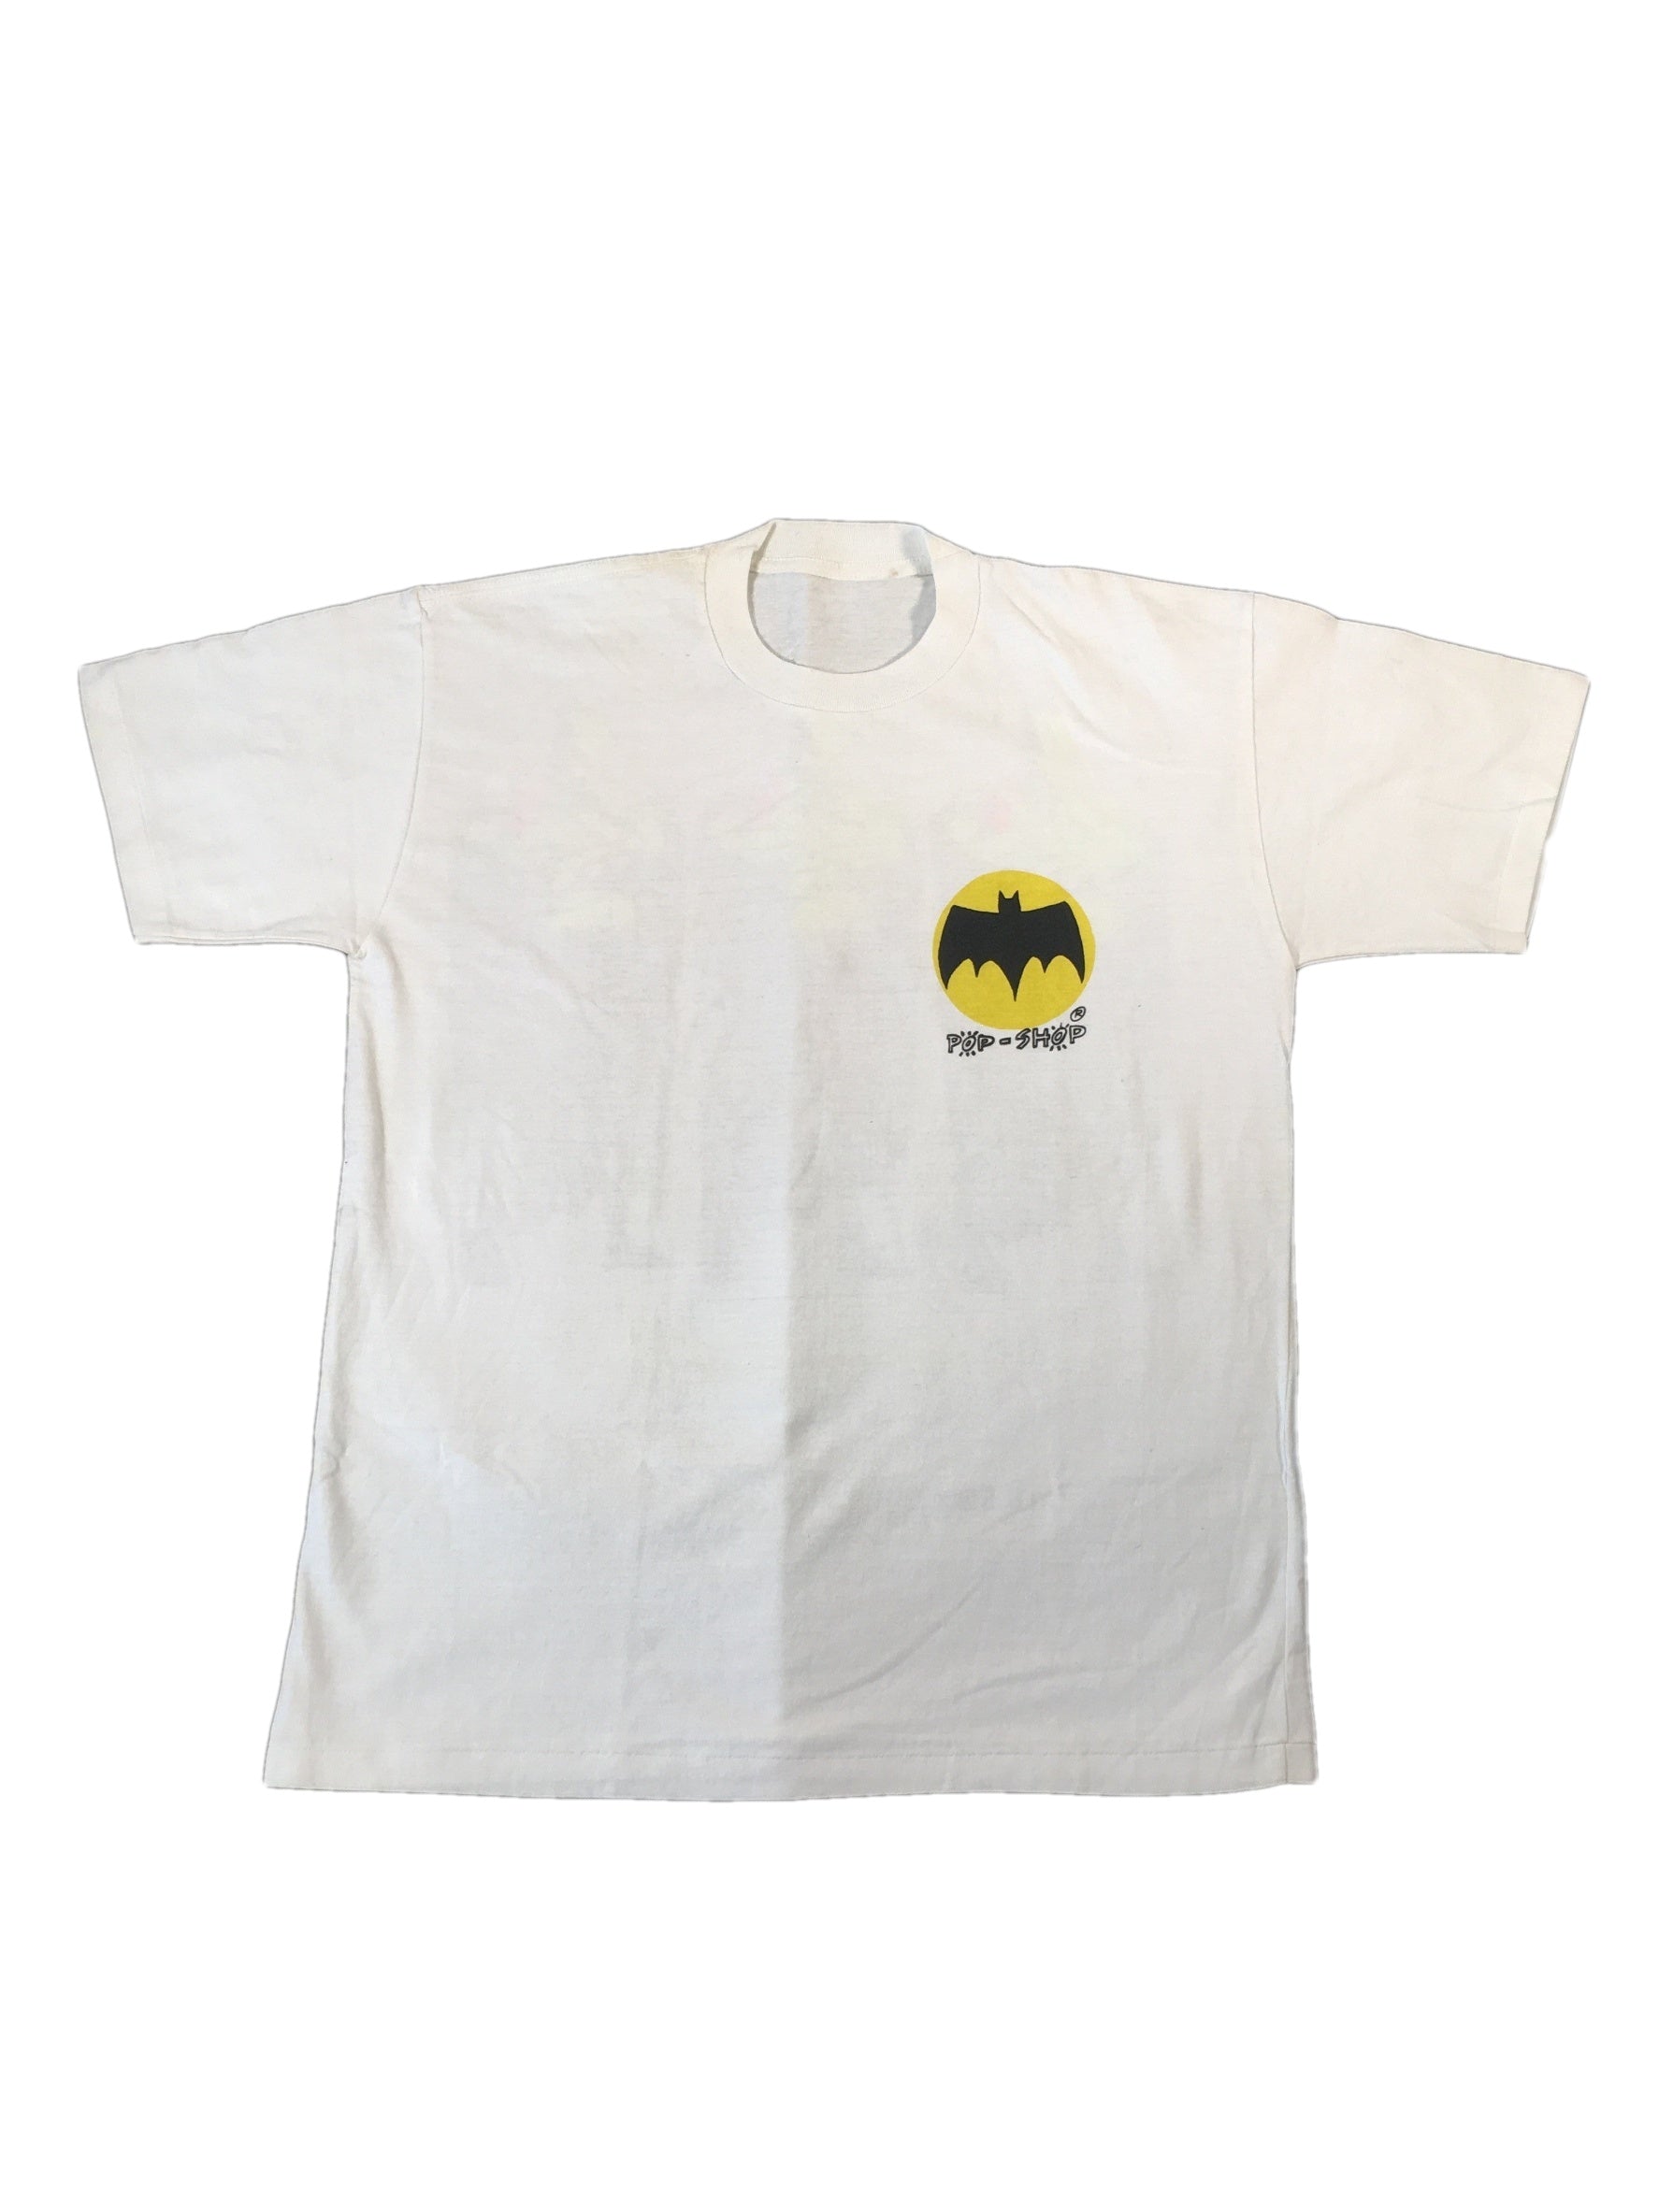 Vintage Keith Haring Pop Shop "Batman" T-Shirt - jointcustodydc